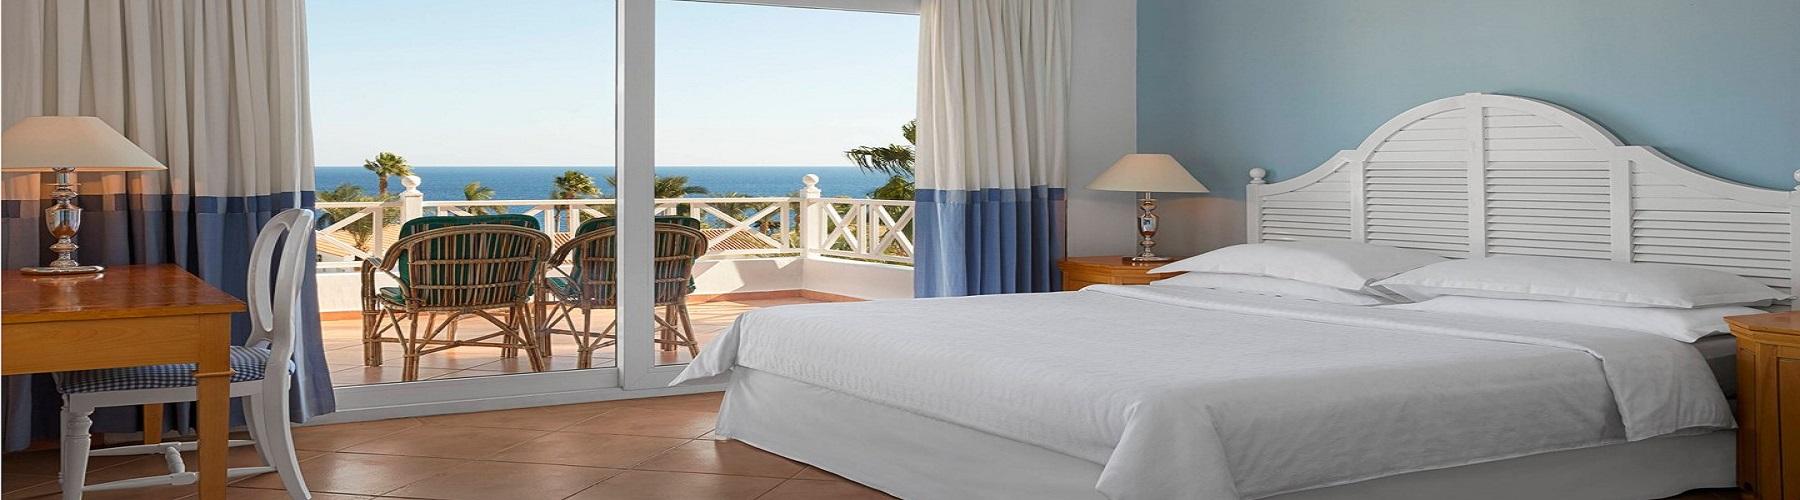 Забронировать номер в Sheraton Sharm Hotel, Resort, Villas and Spa